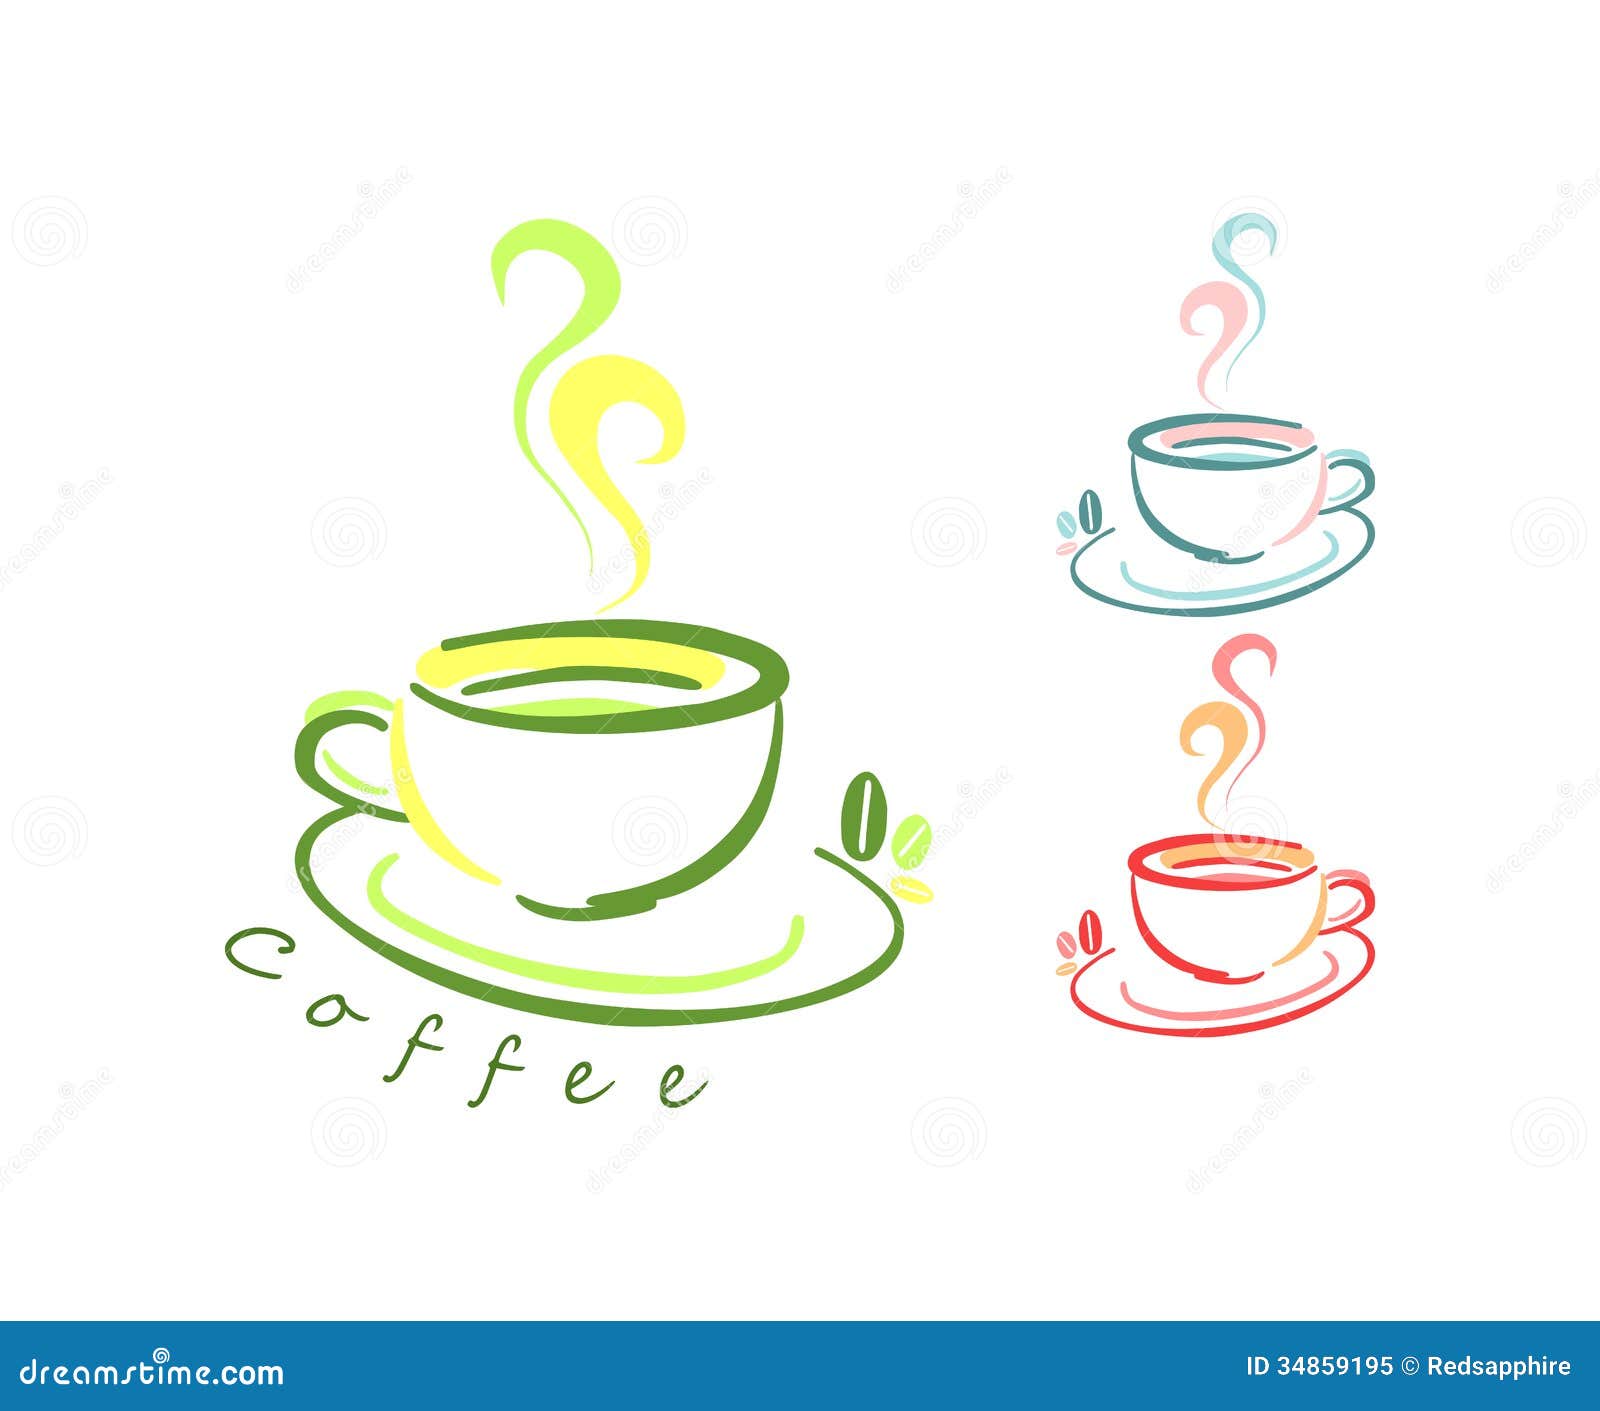 Image of Coffee Vector Illustration. Colorful logo design.